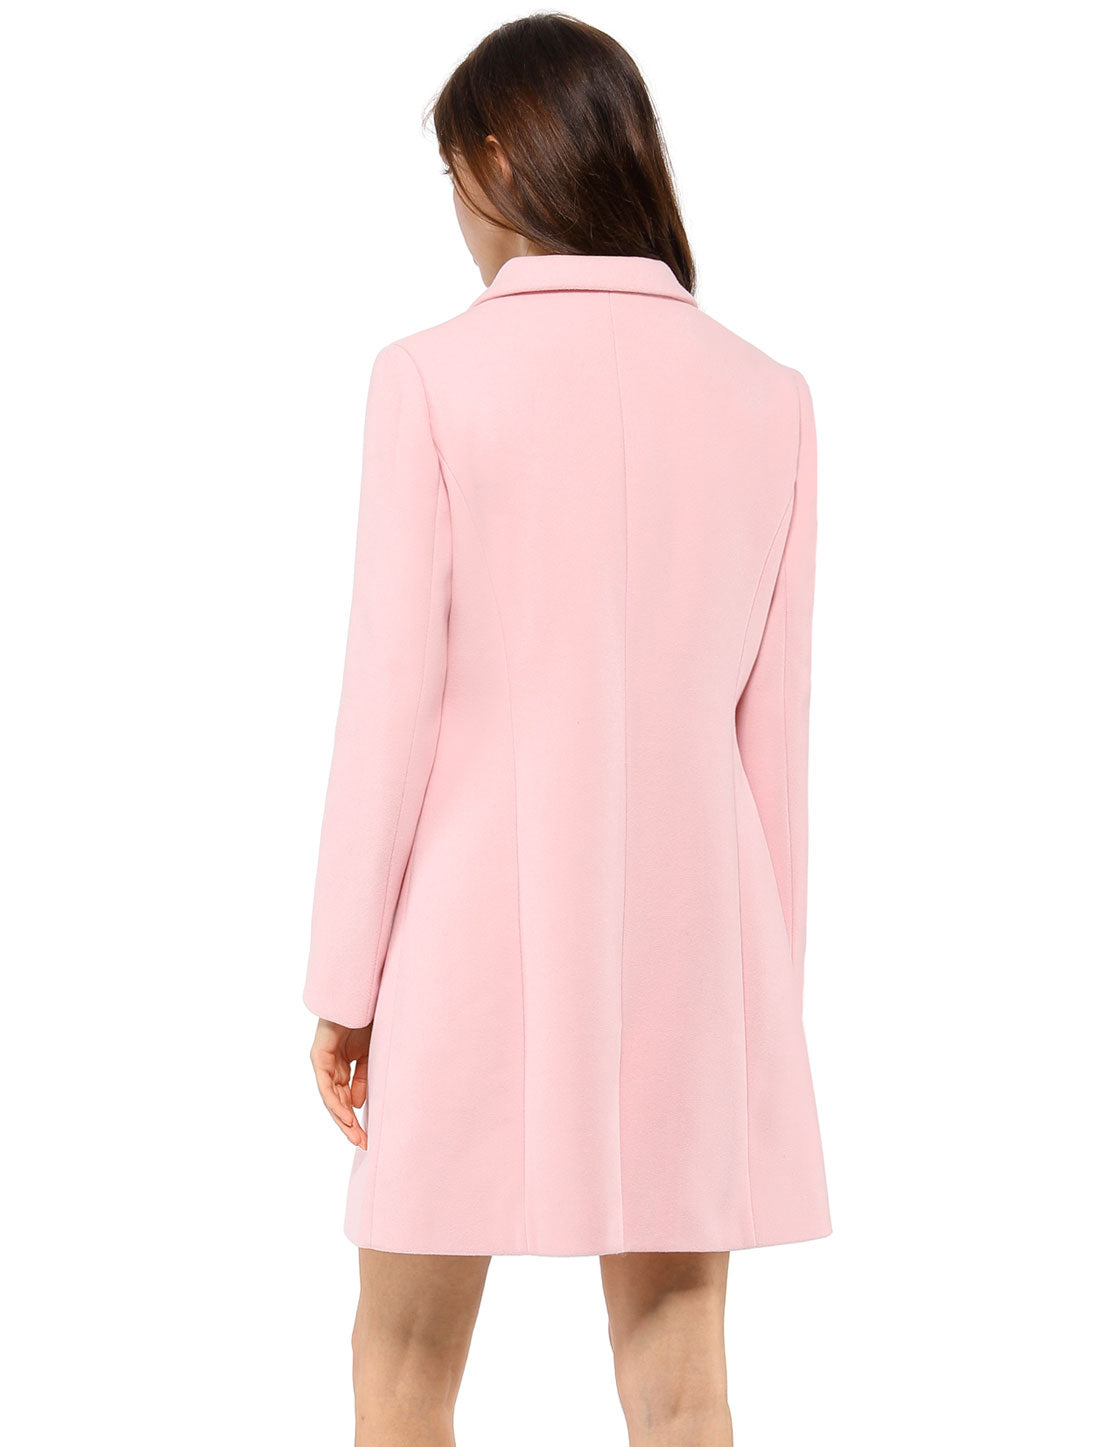 Allegra K Notched Lapel Single Breasted Outwear Winter Coat Pink